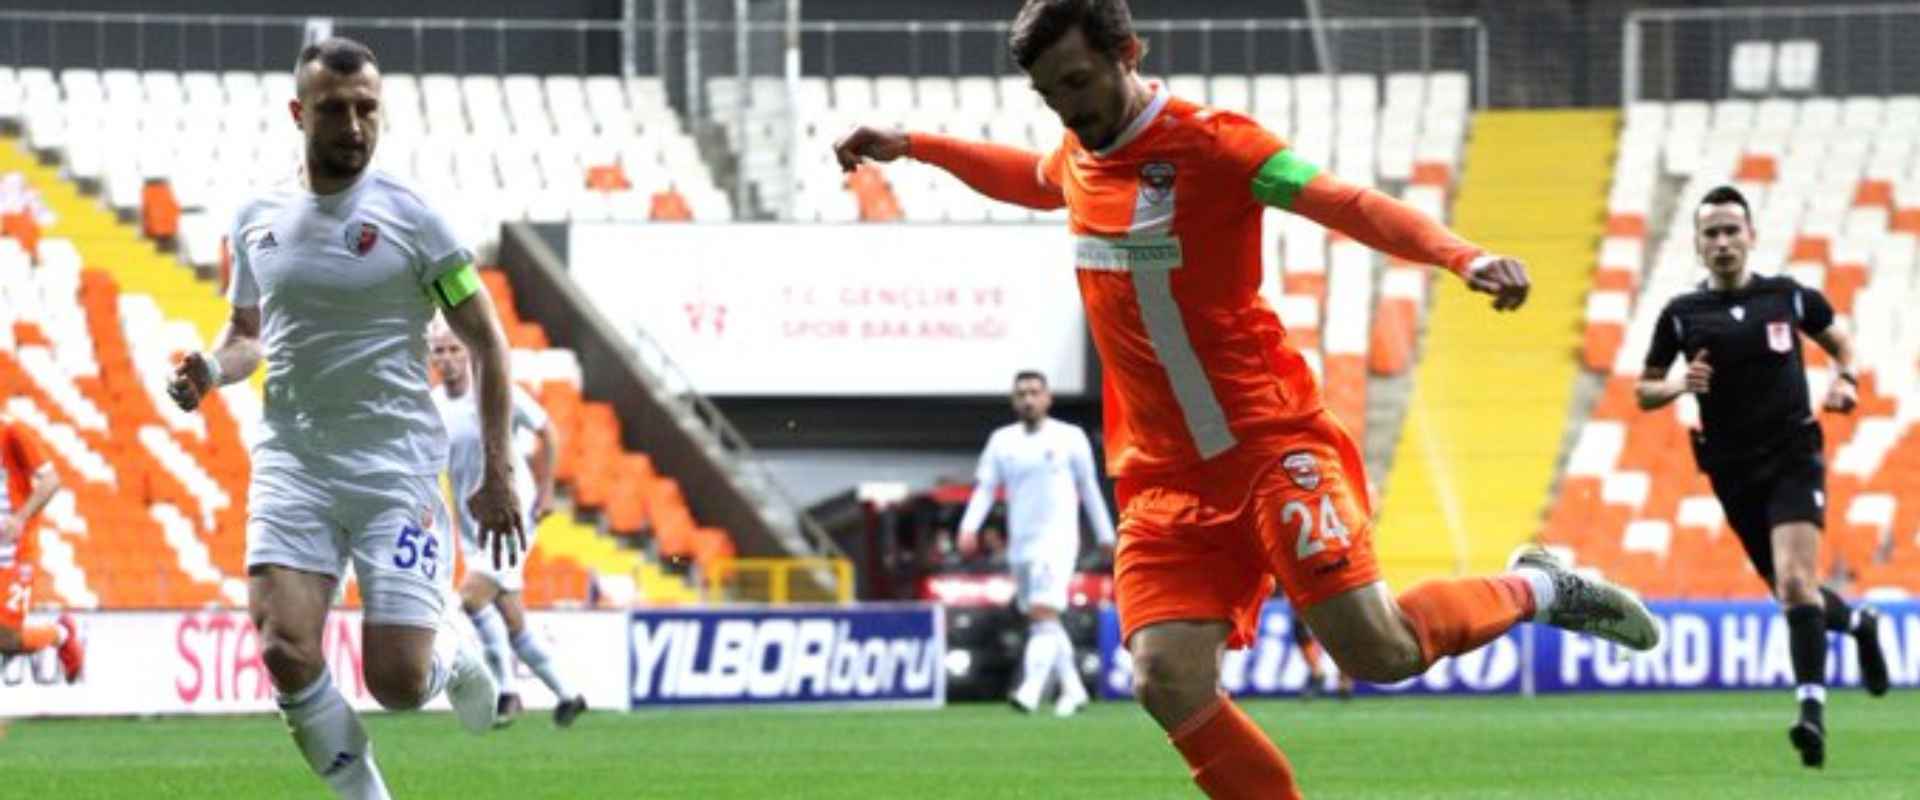 Adanaspor'umuz 1-2 Ankaraspor